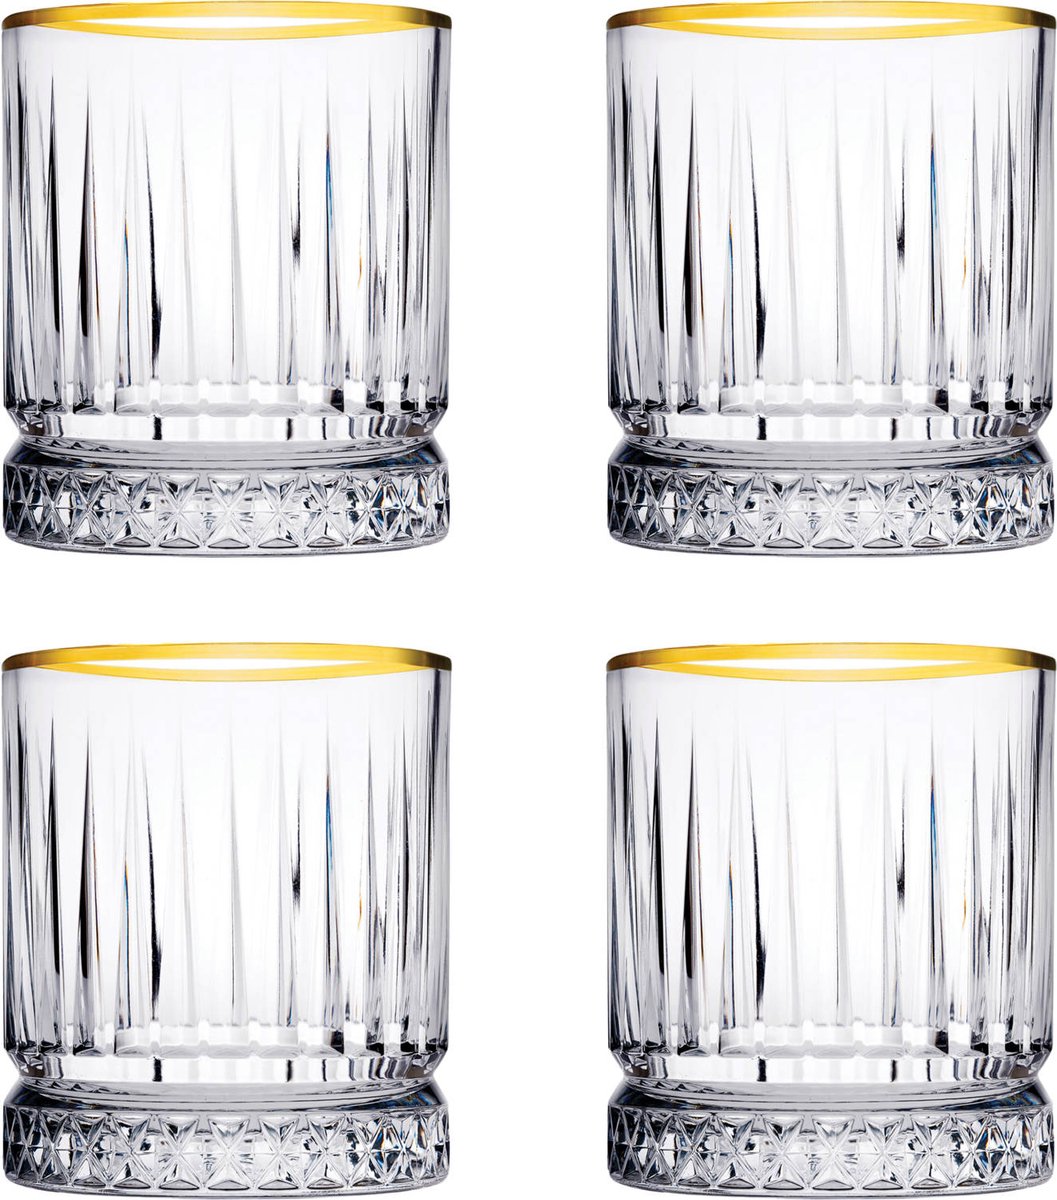 Glozini Tumblerglazen met Gouden Rand - Set van 4 - Waterglas - Whiskyglas